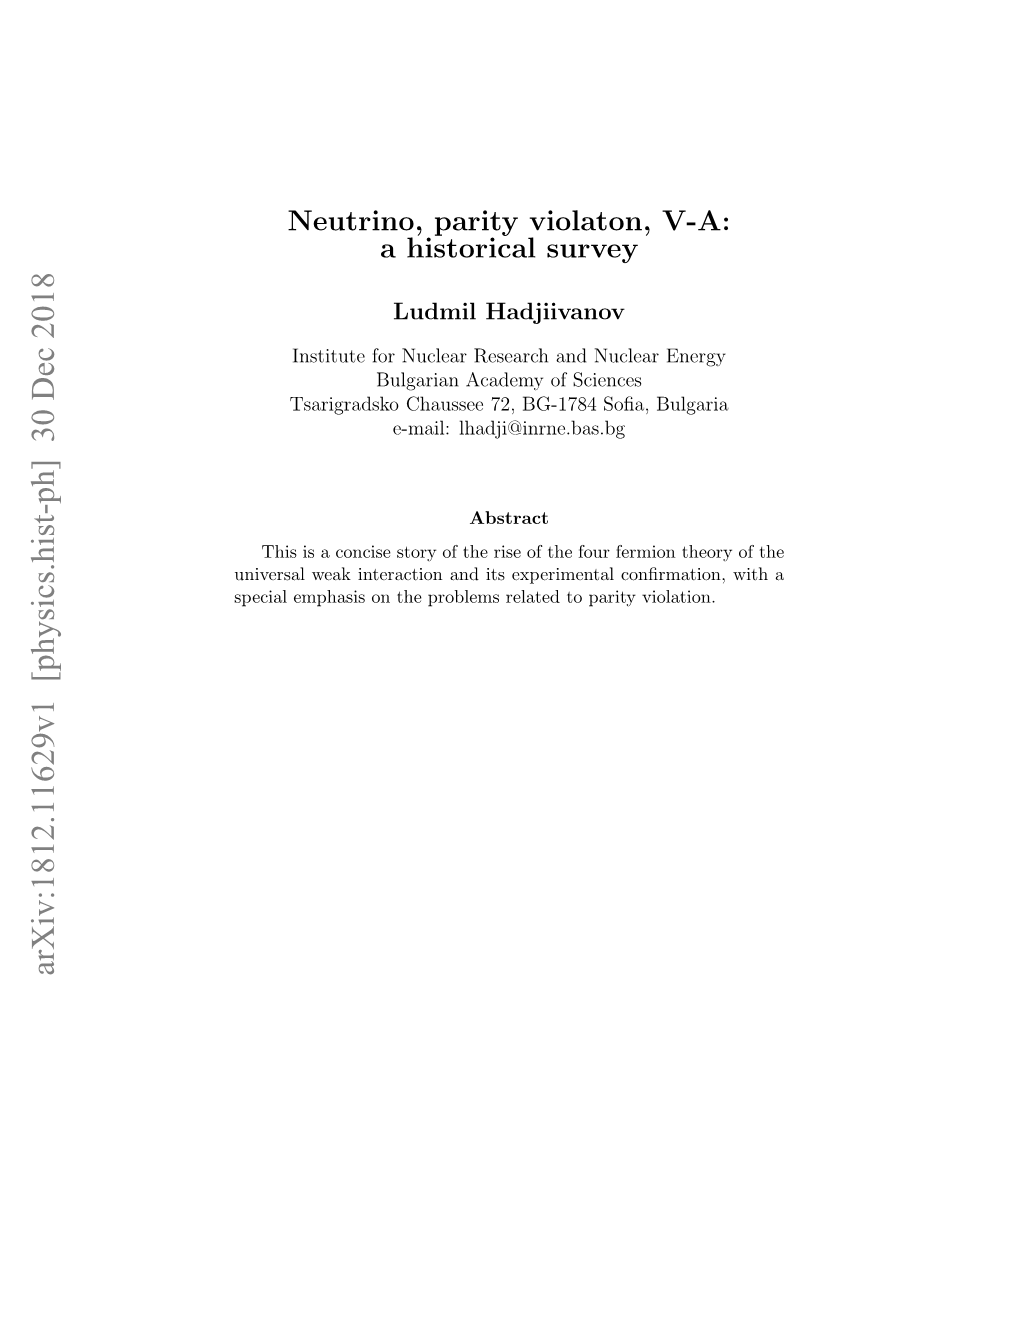 Neutrino, Parity Violaton, VA: a Historical Survey